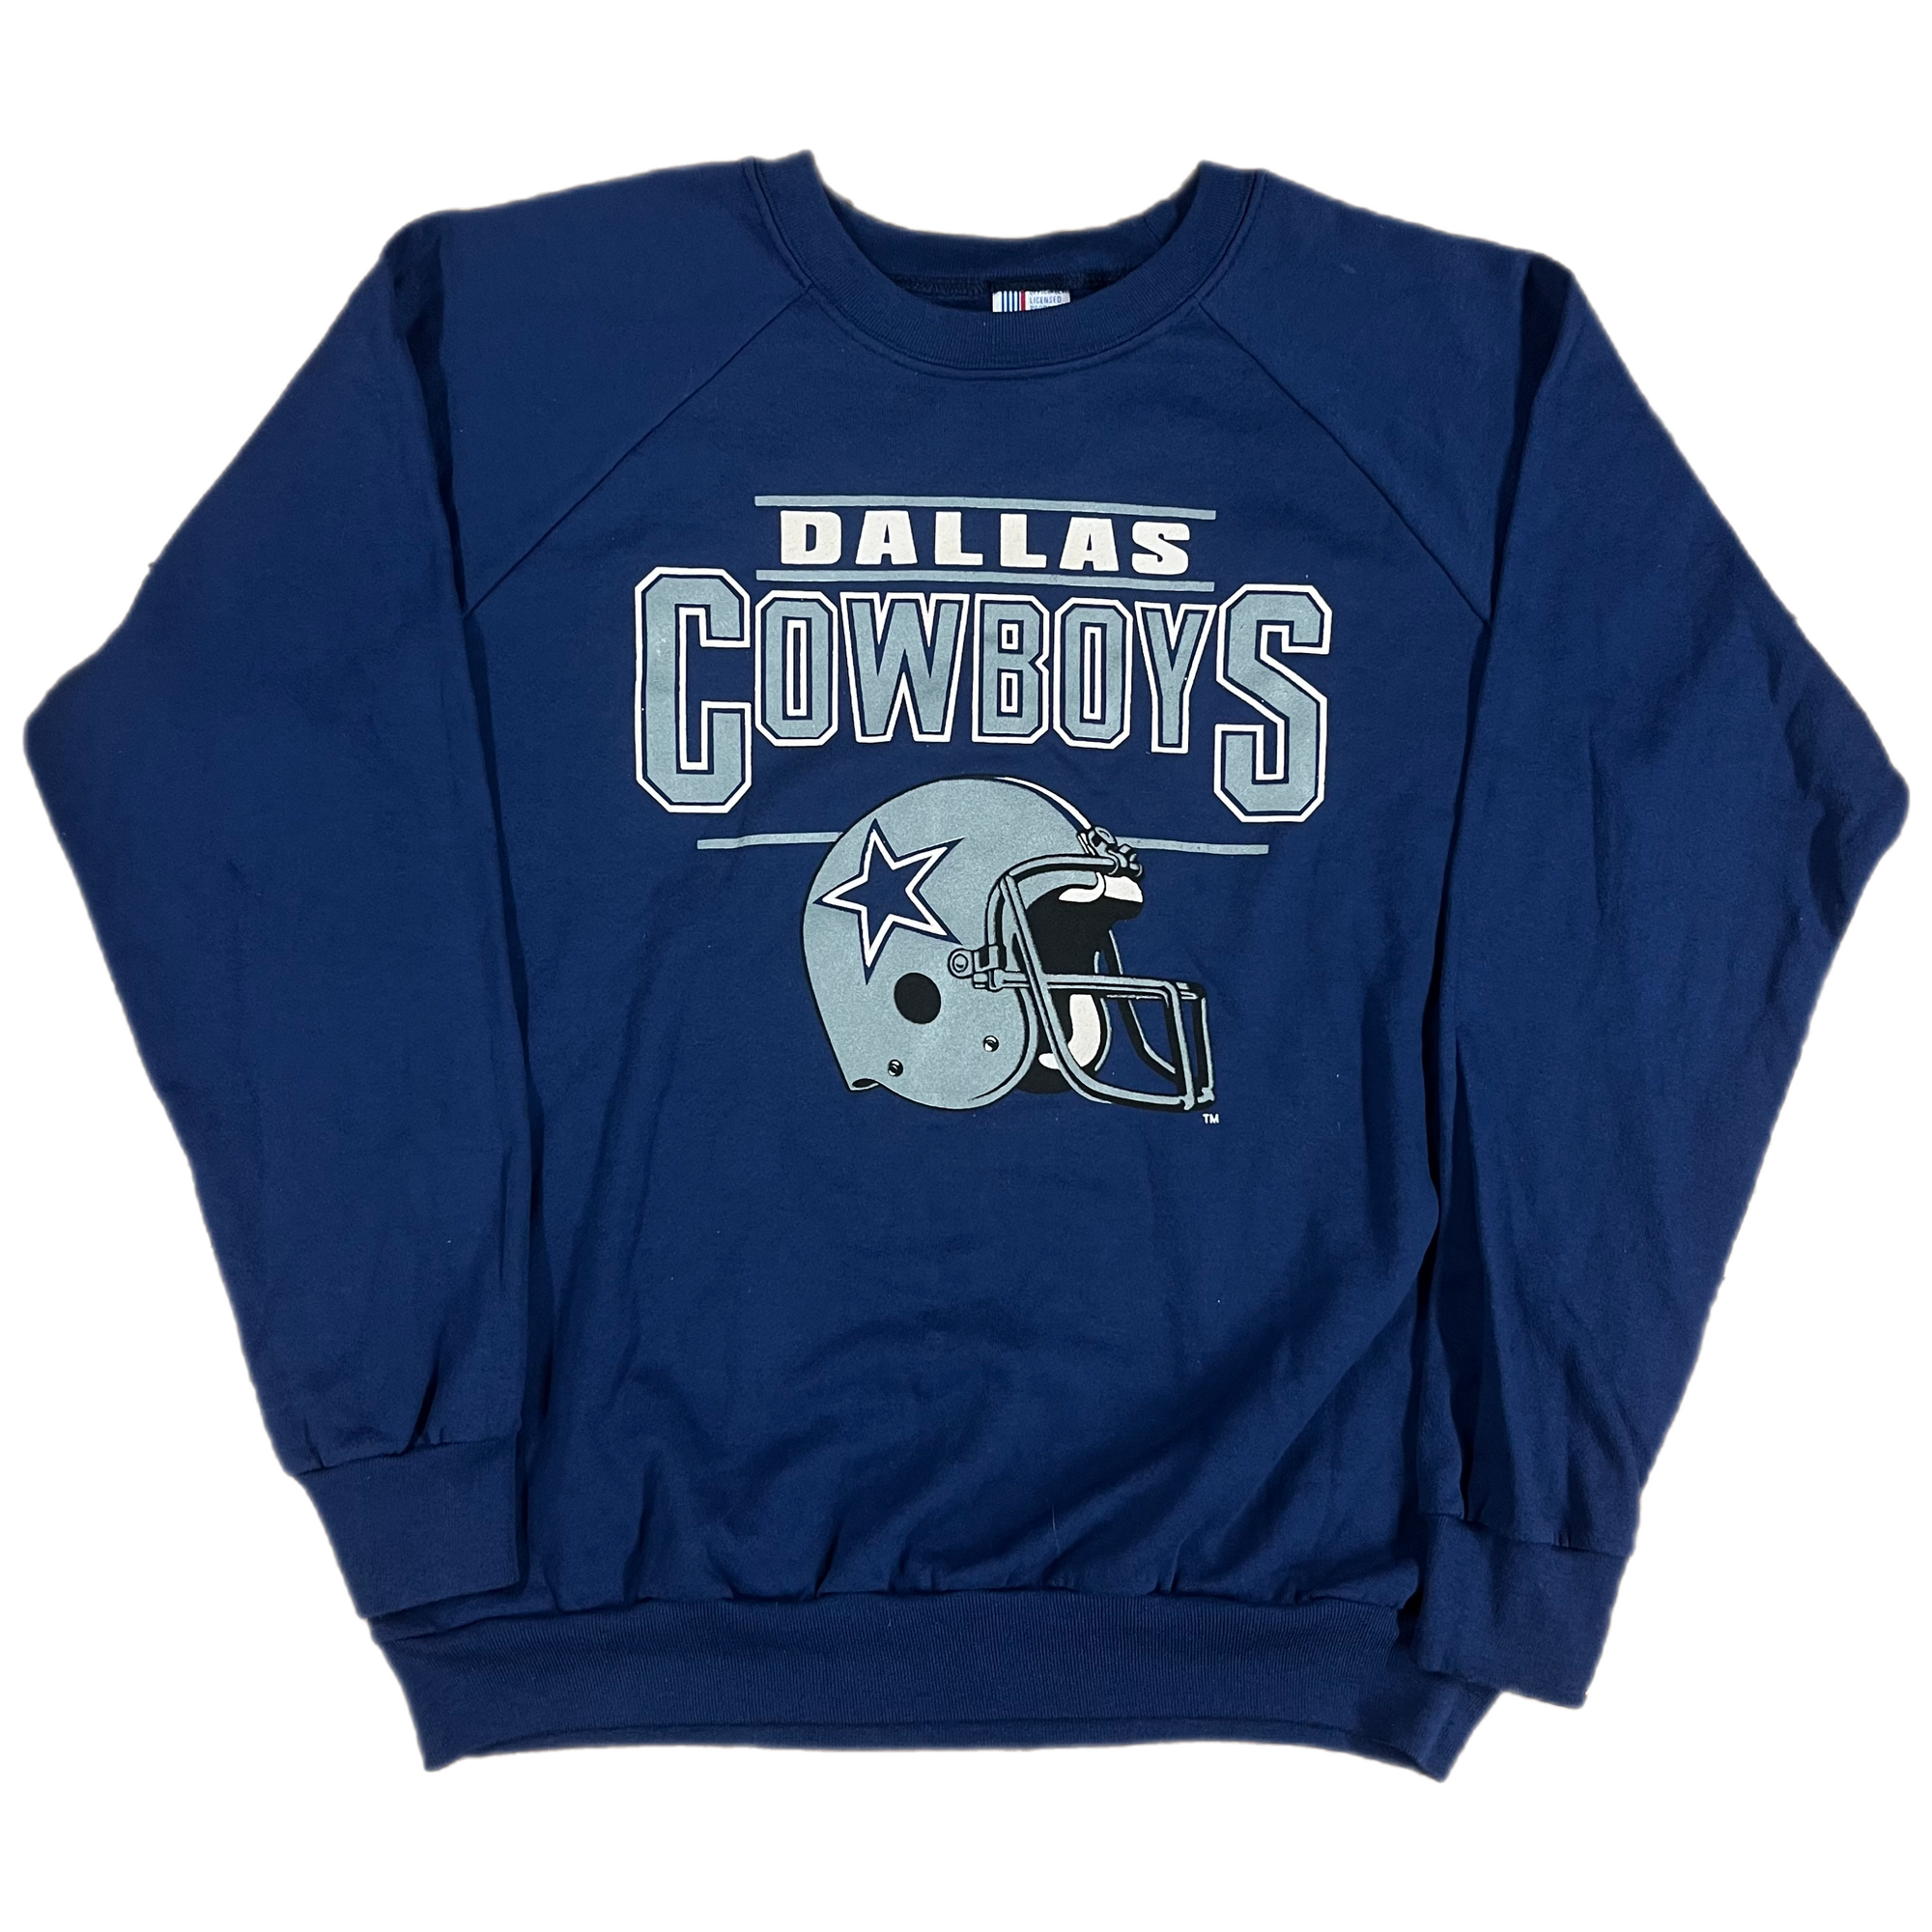 Vintage 1992 Super Bowl Dallas Cowboys Sweatshirt Siz… - Gem